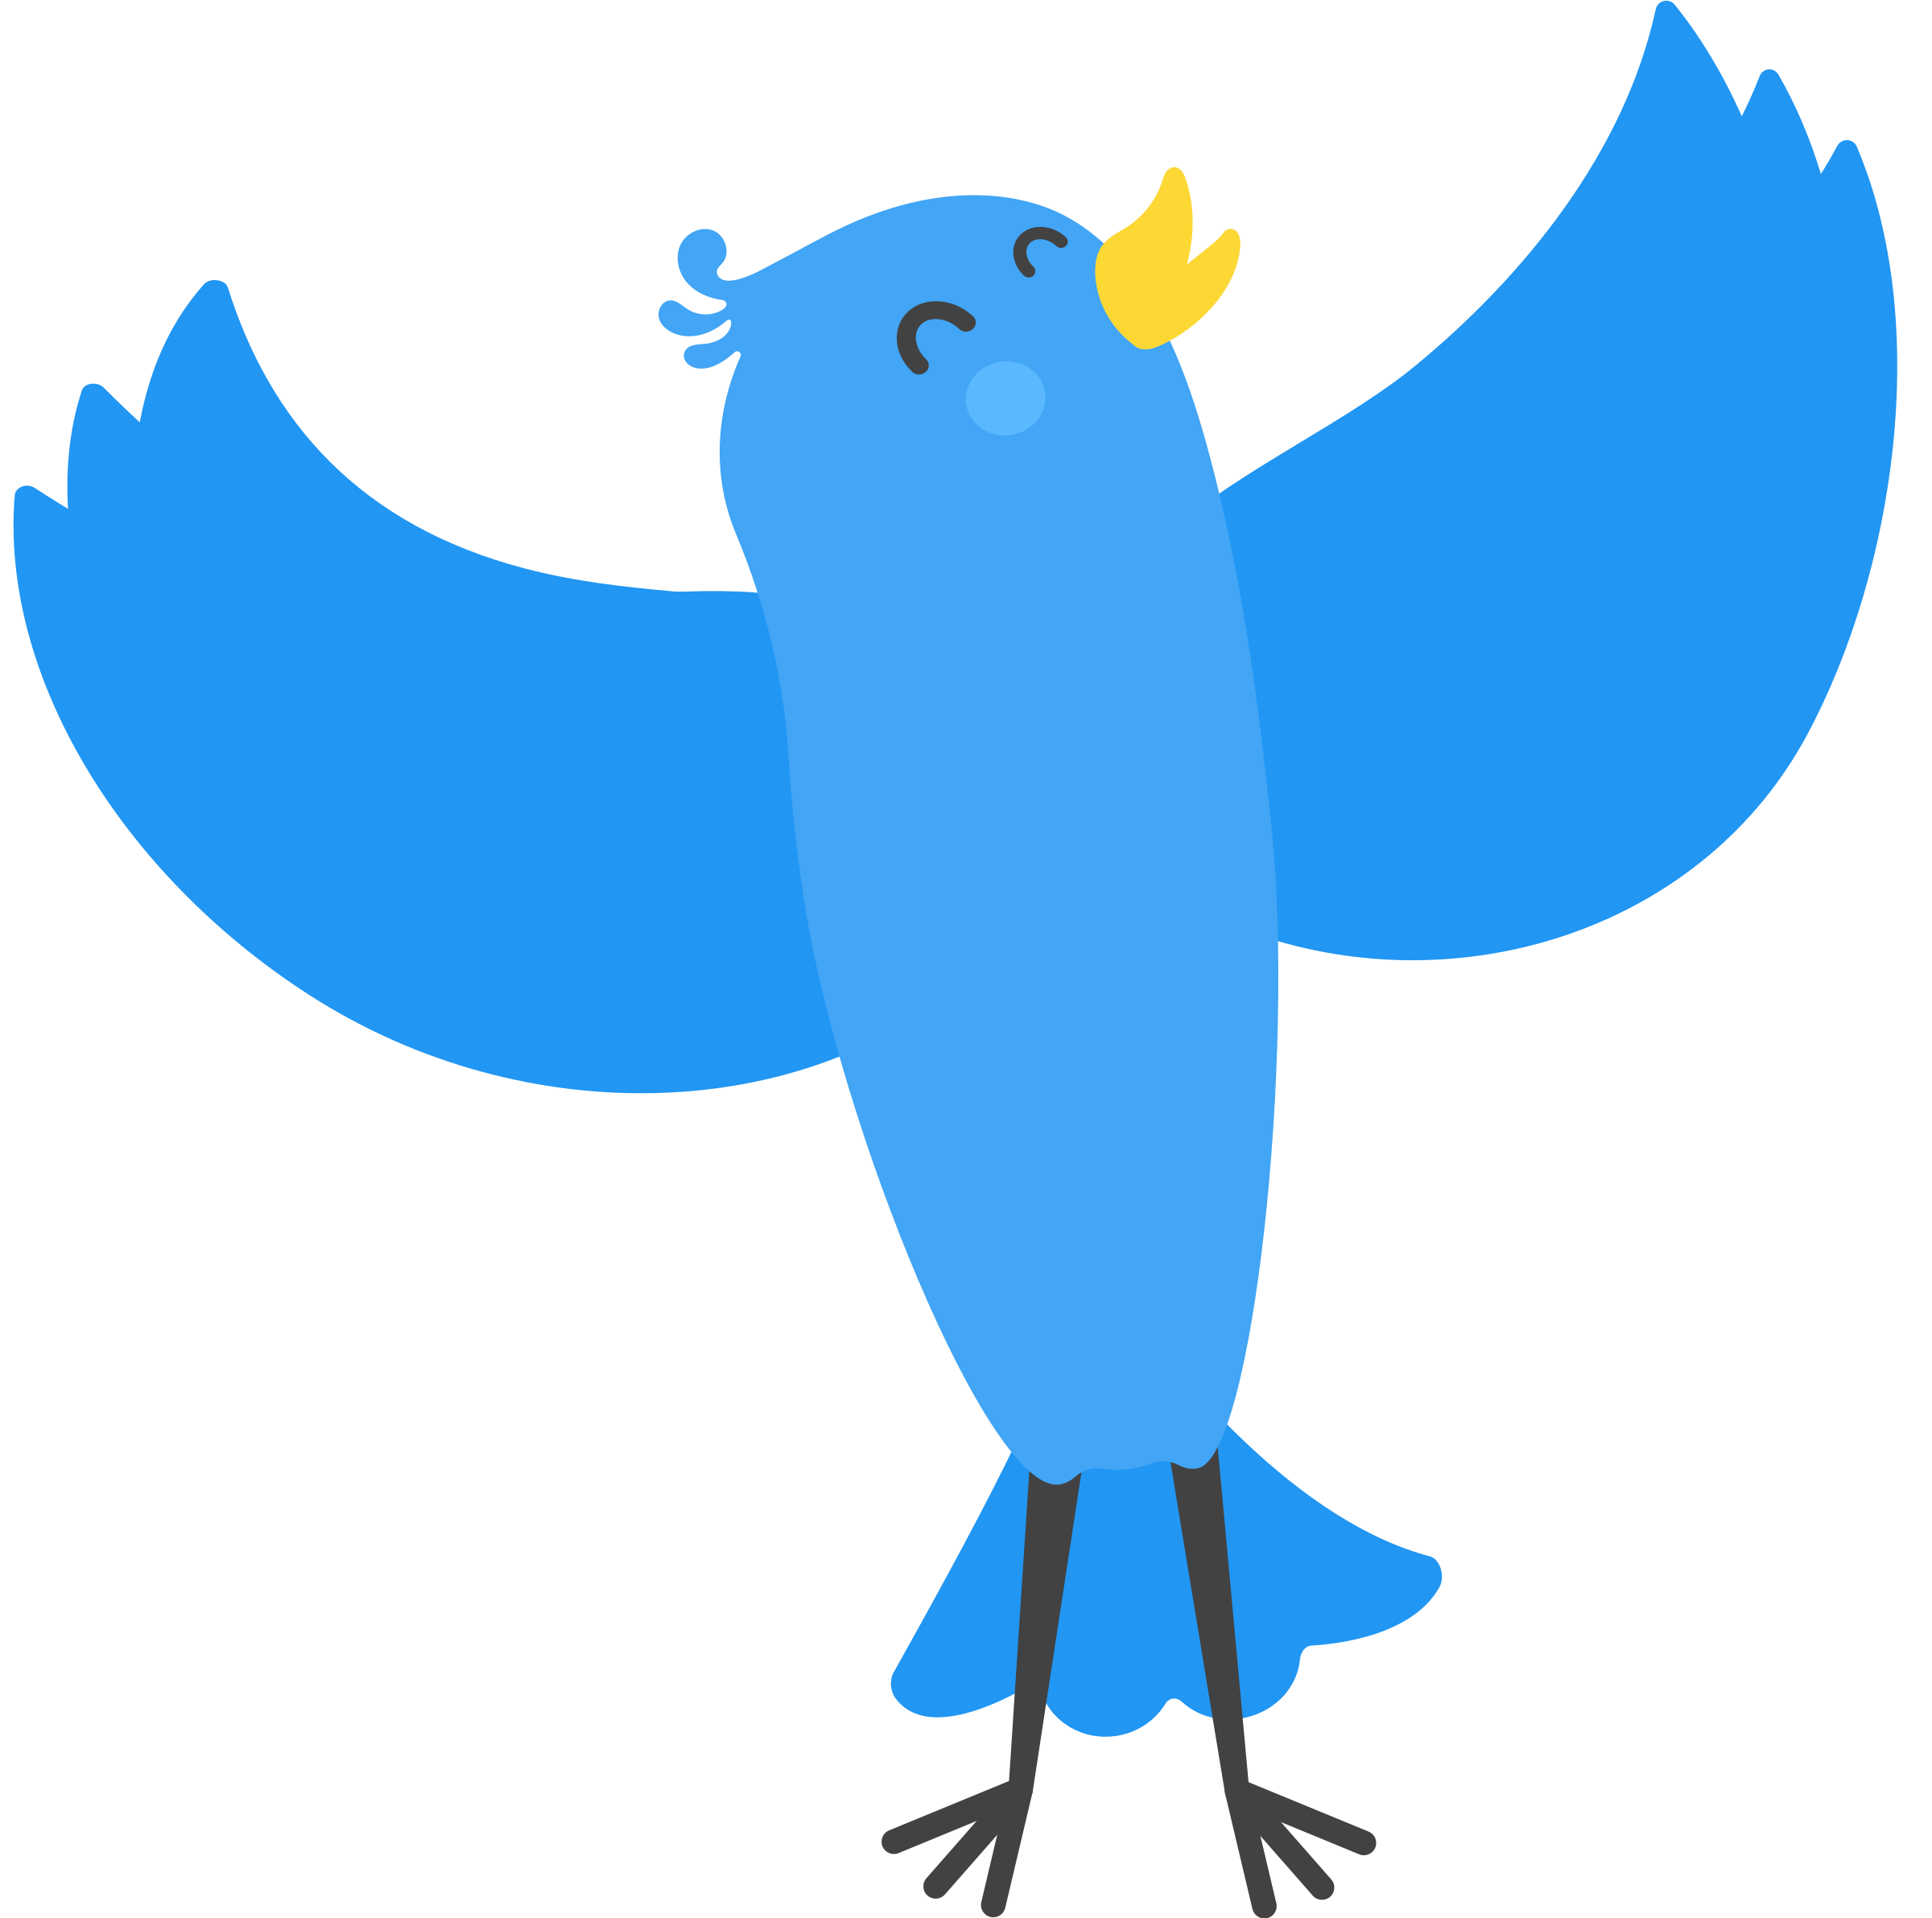 Image of a blue bird